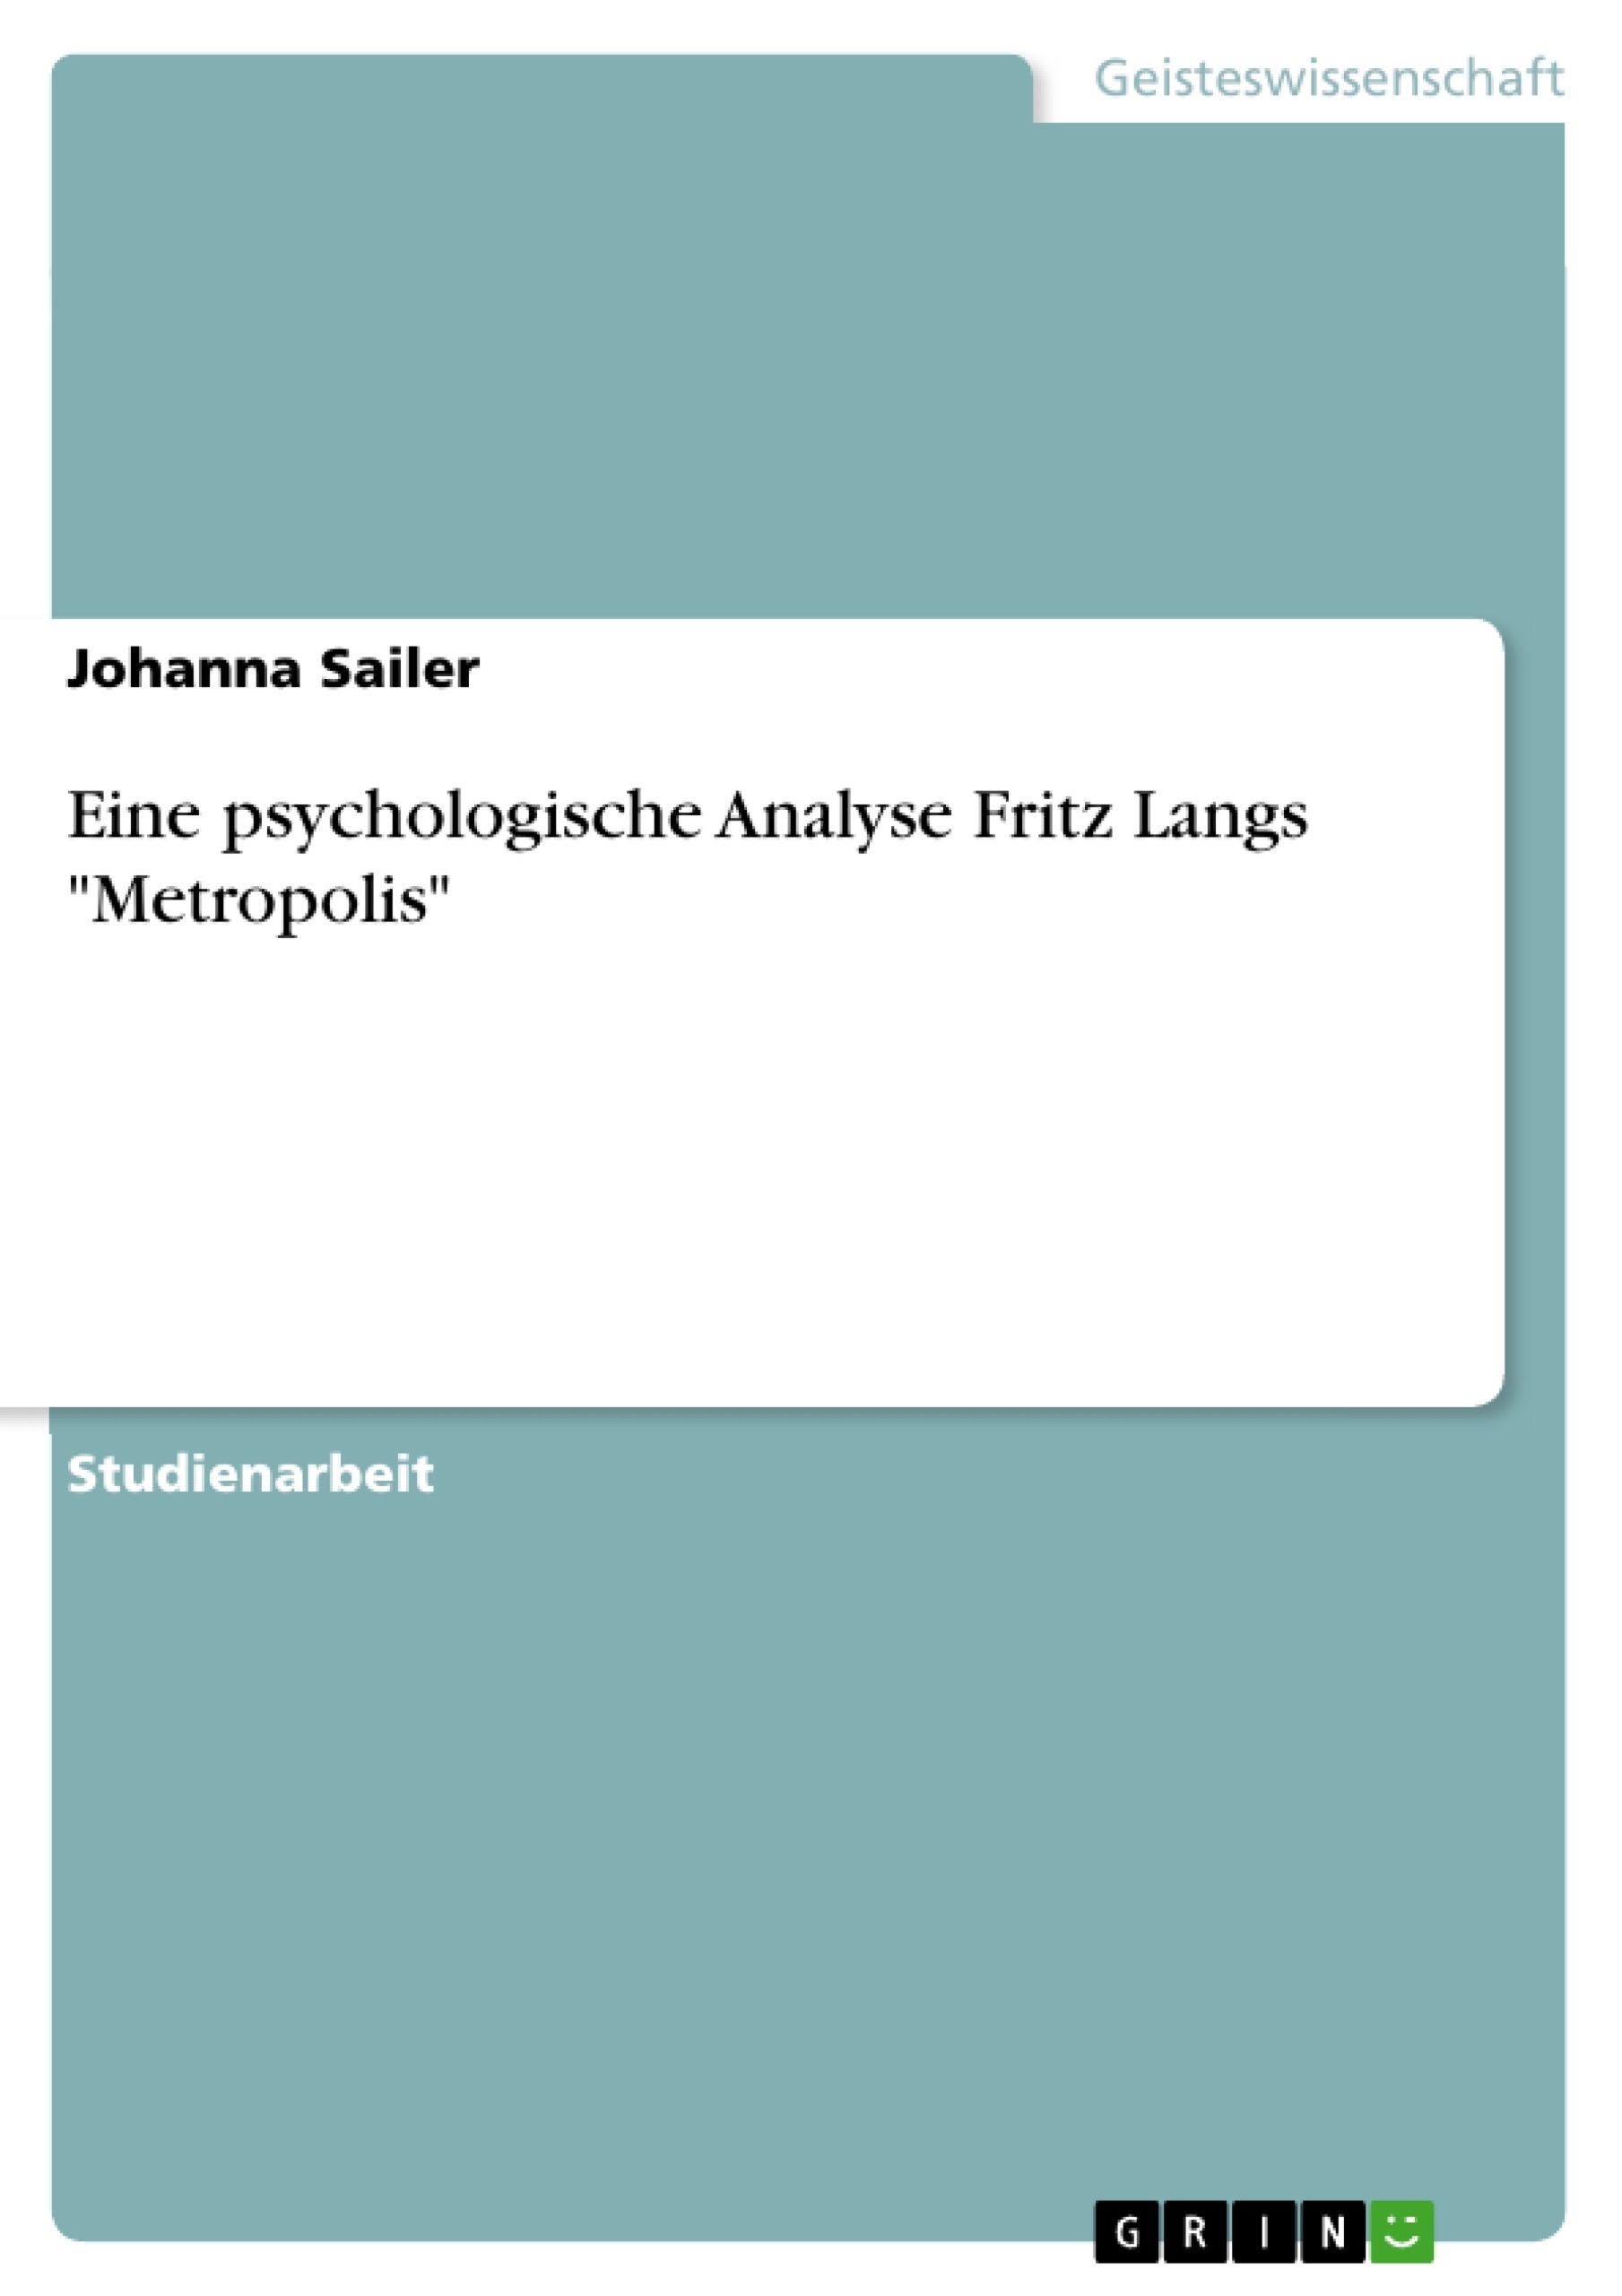 Título: Eine psychologische Analyse Fritz Langs "Metropolis"